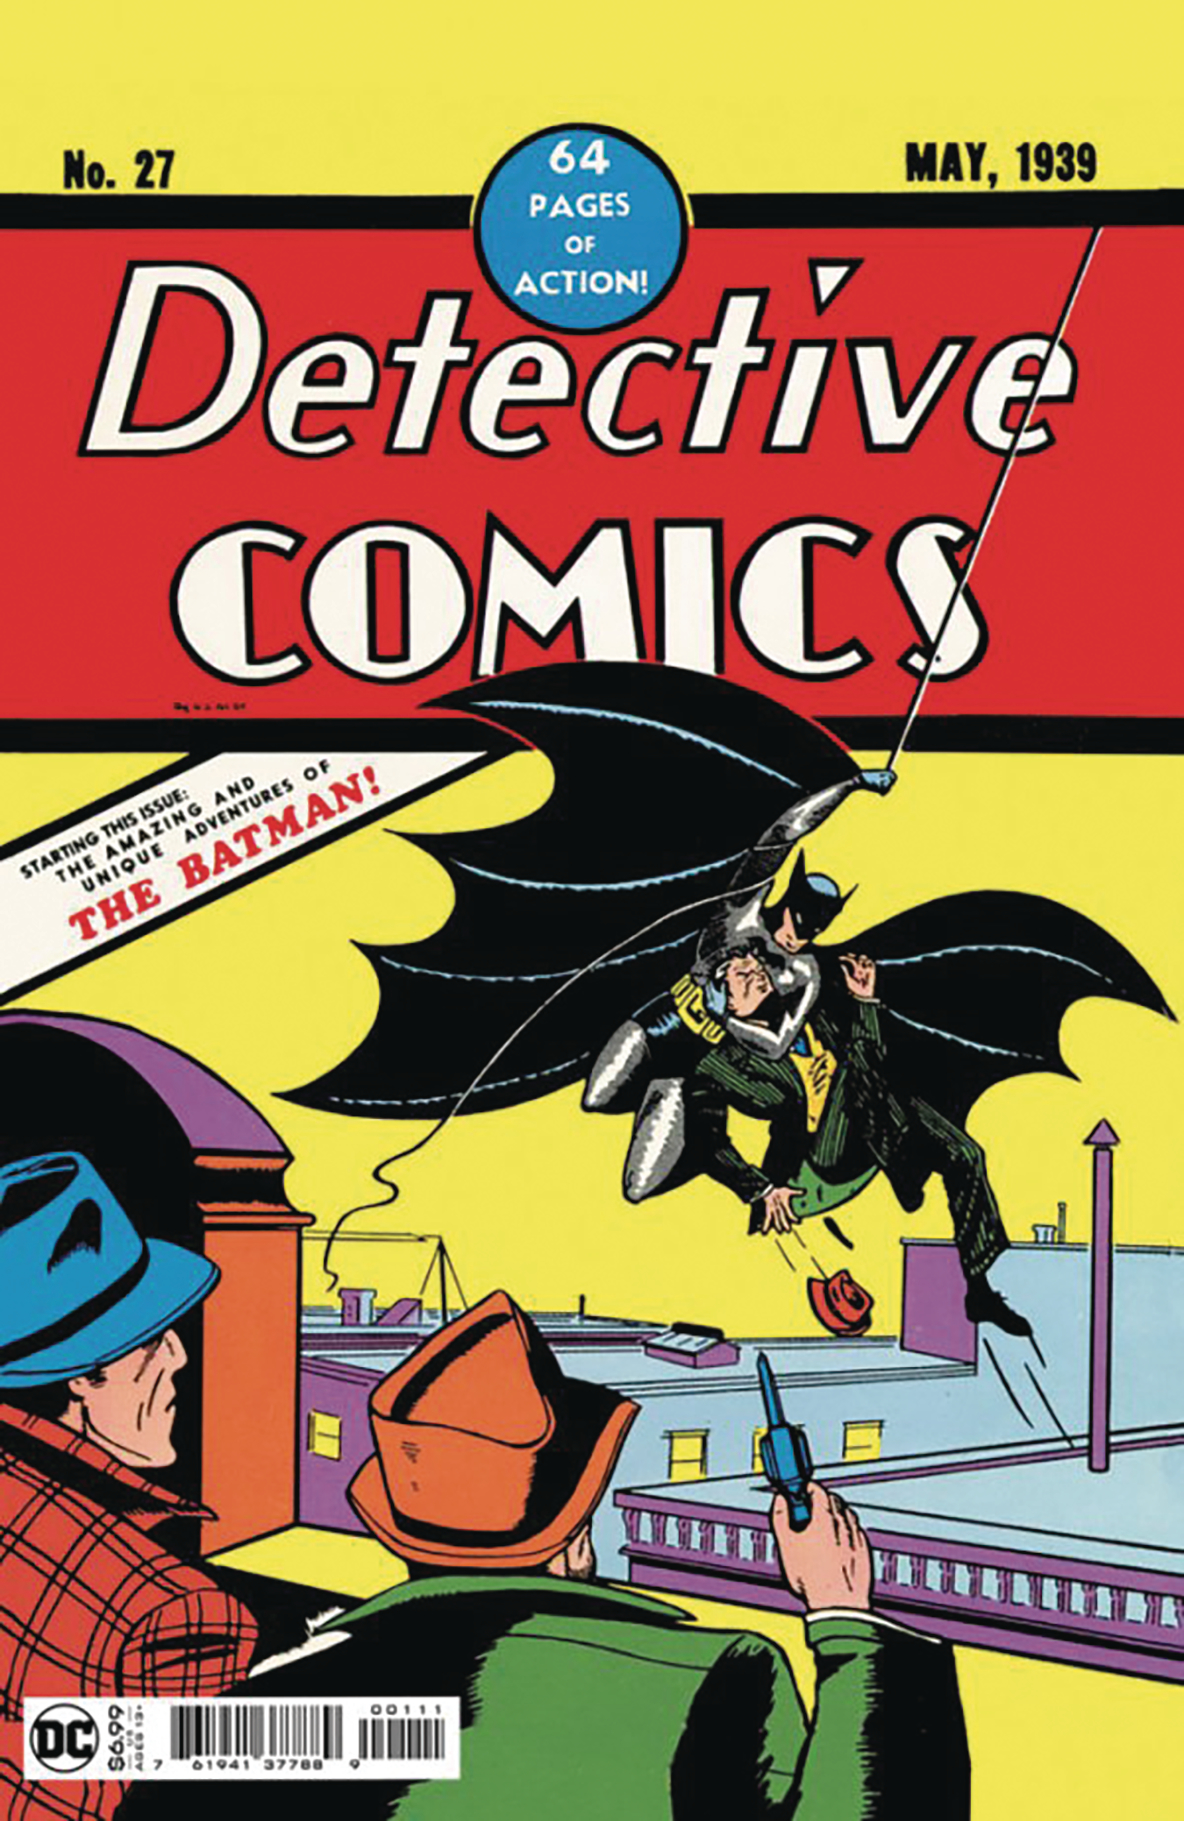 Dynamic Forces Detective Comics #27 CGC Graded